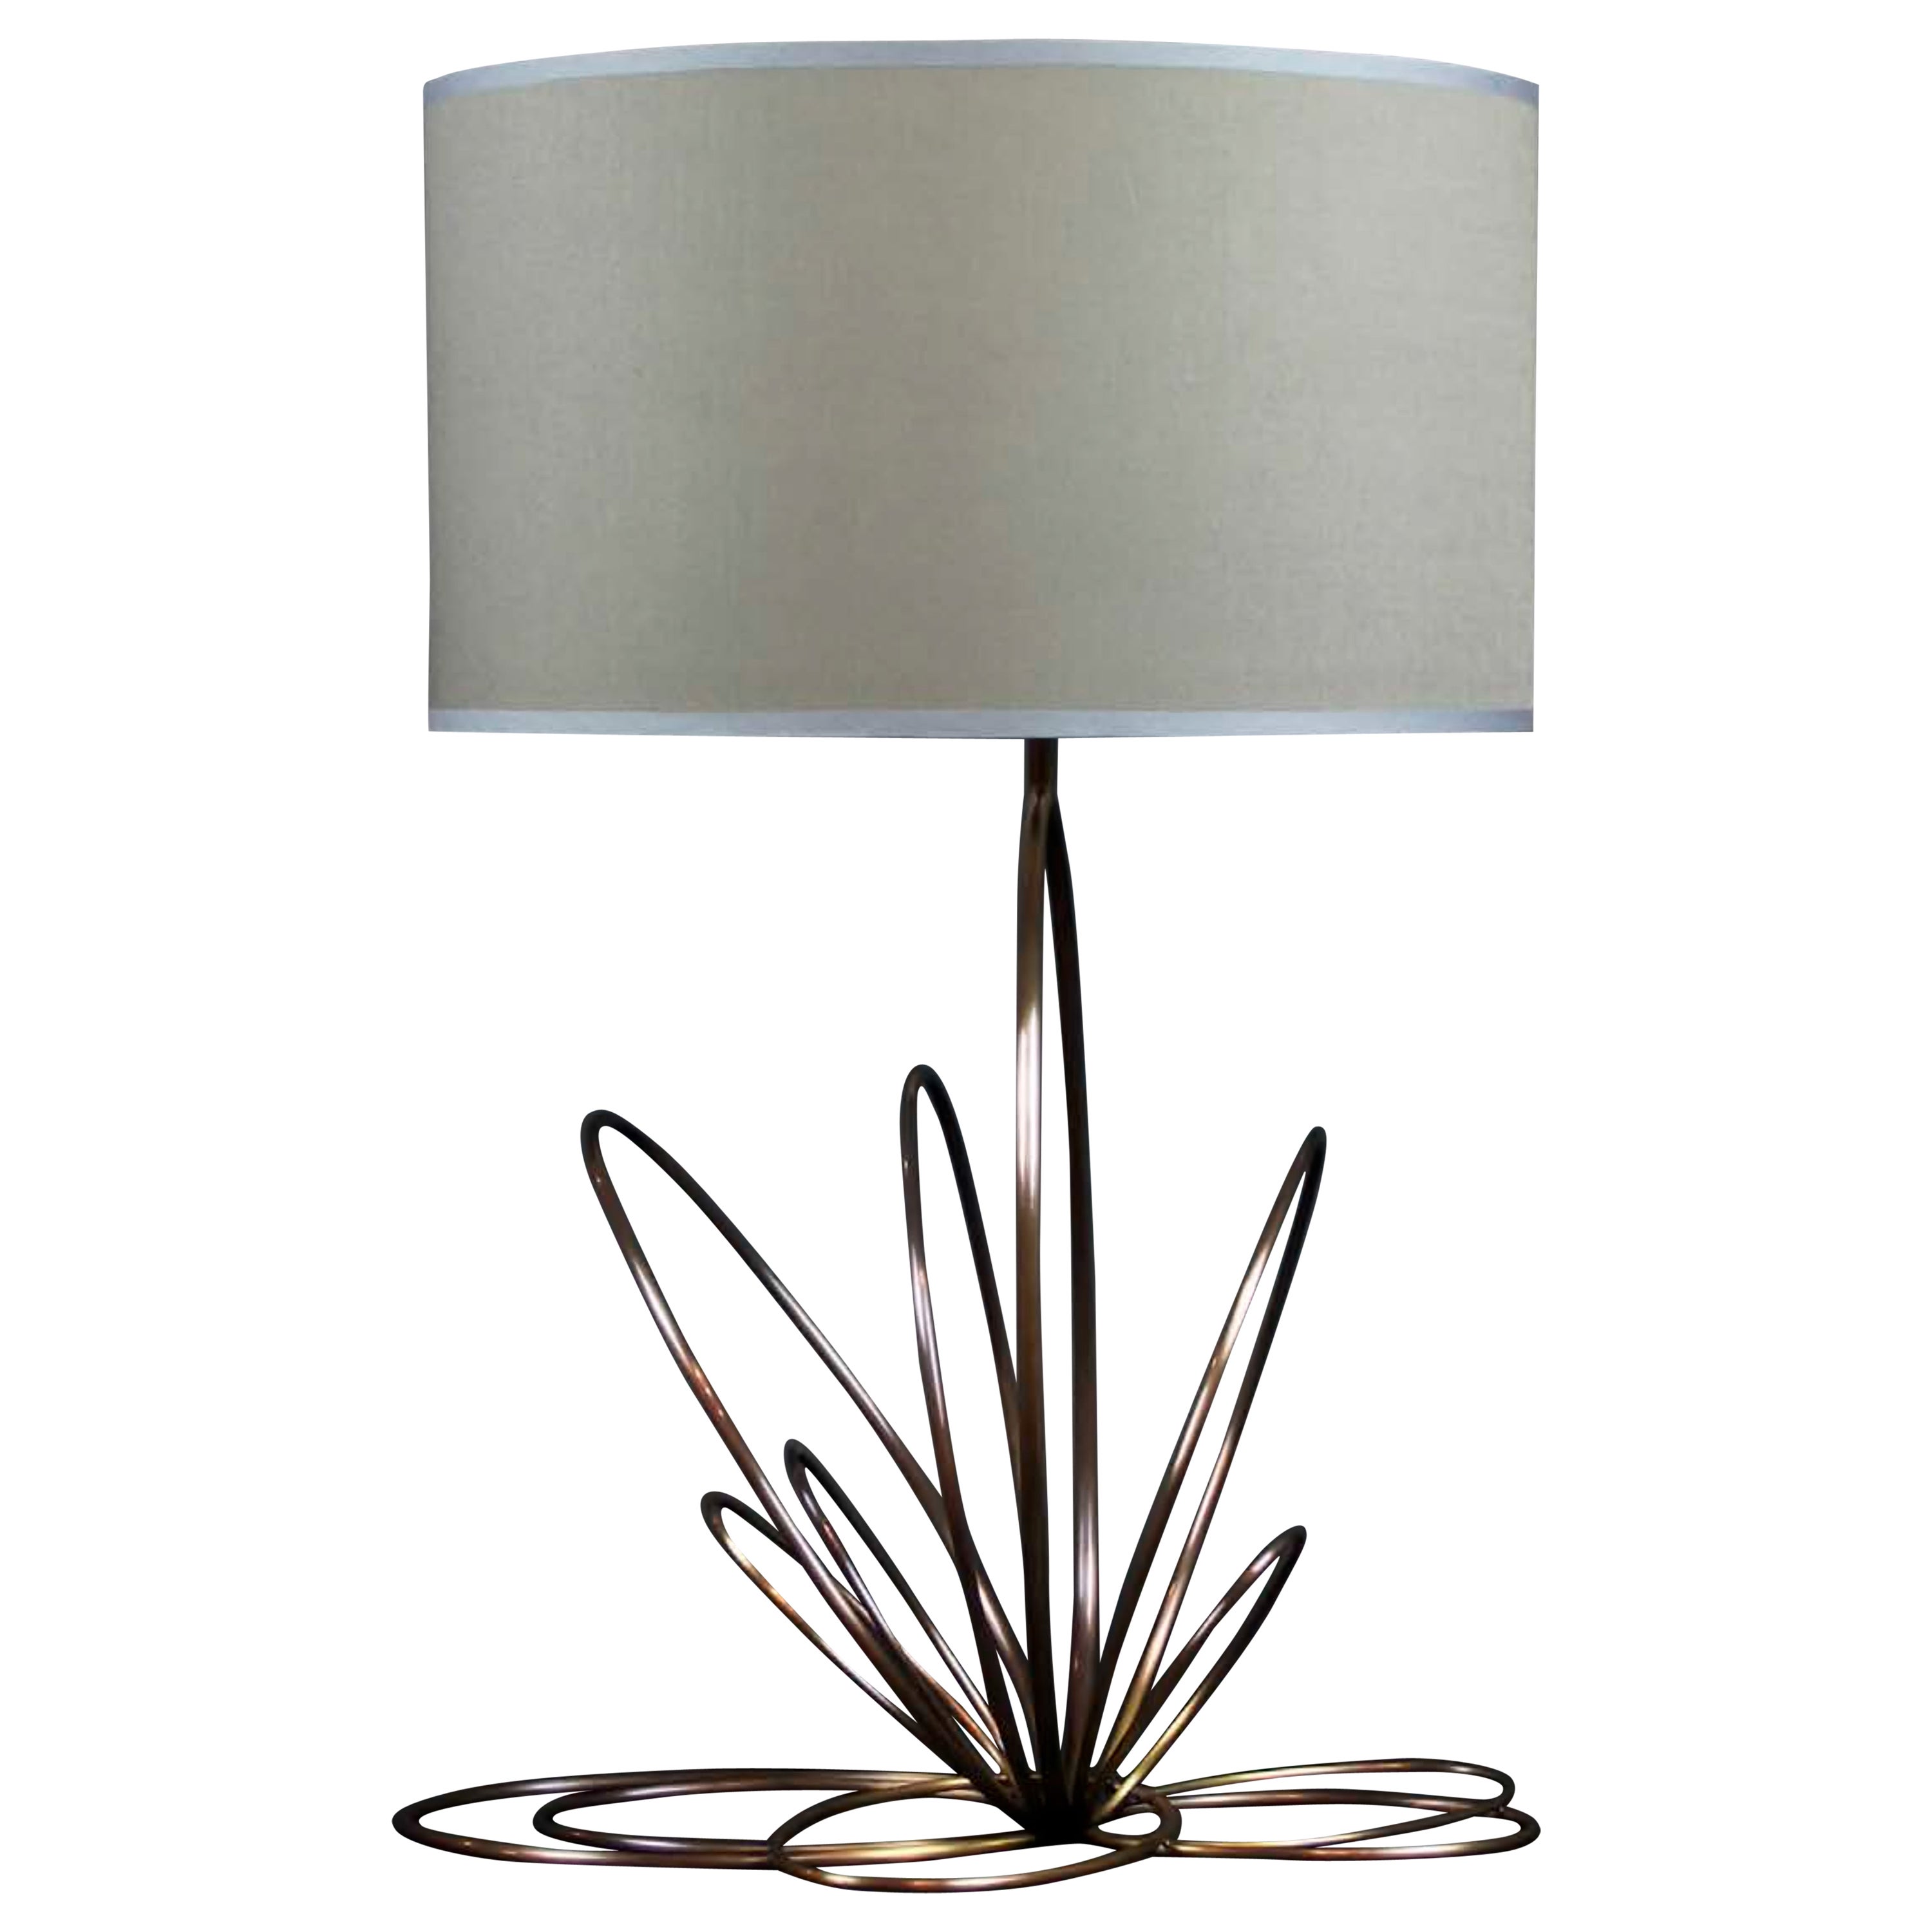 Ellipse 2 Table Lamp by Atelier Demichelis For Sale